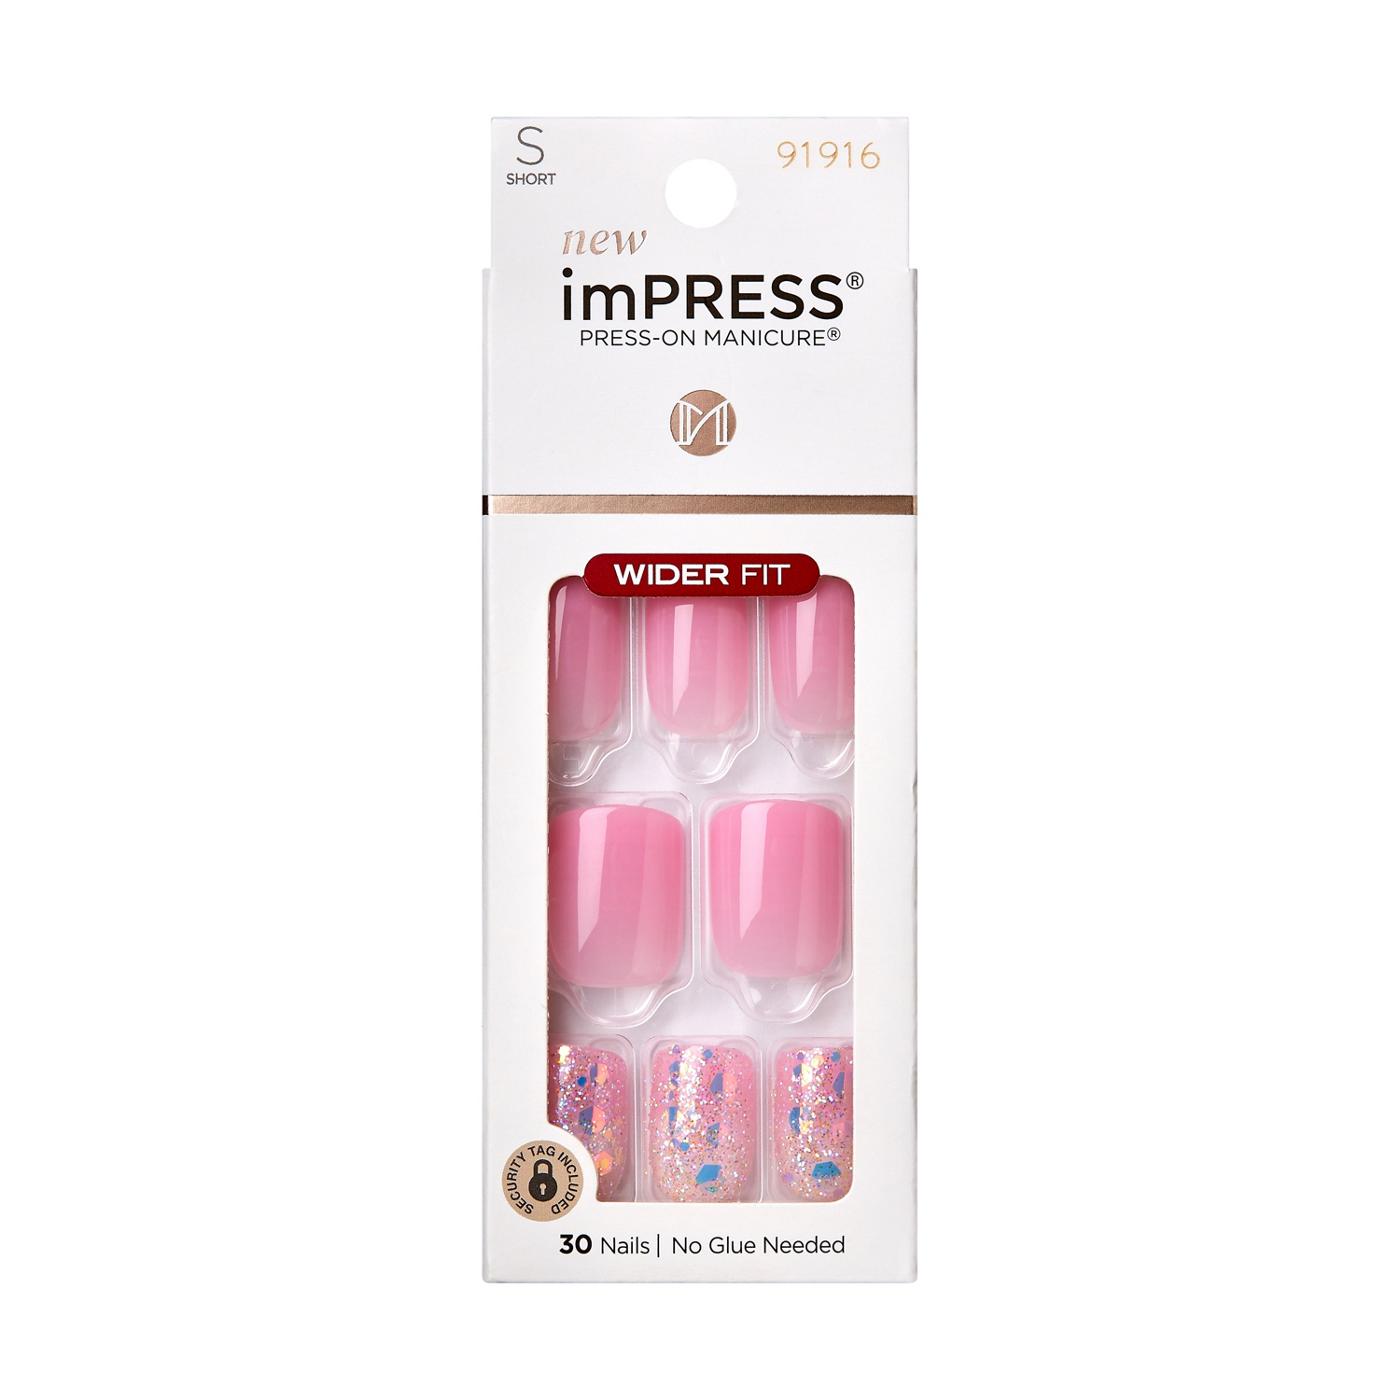 KISS imPRESS Press-On Manicure - Dream It Up; image 1 of 7